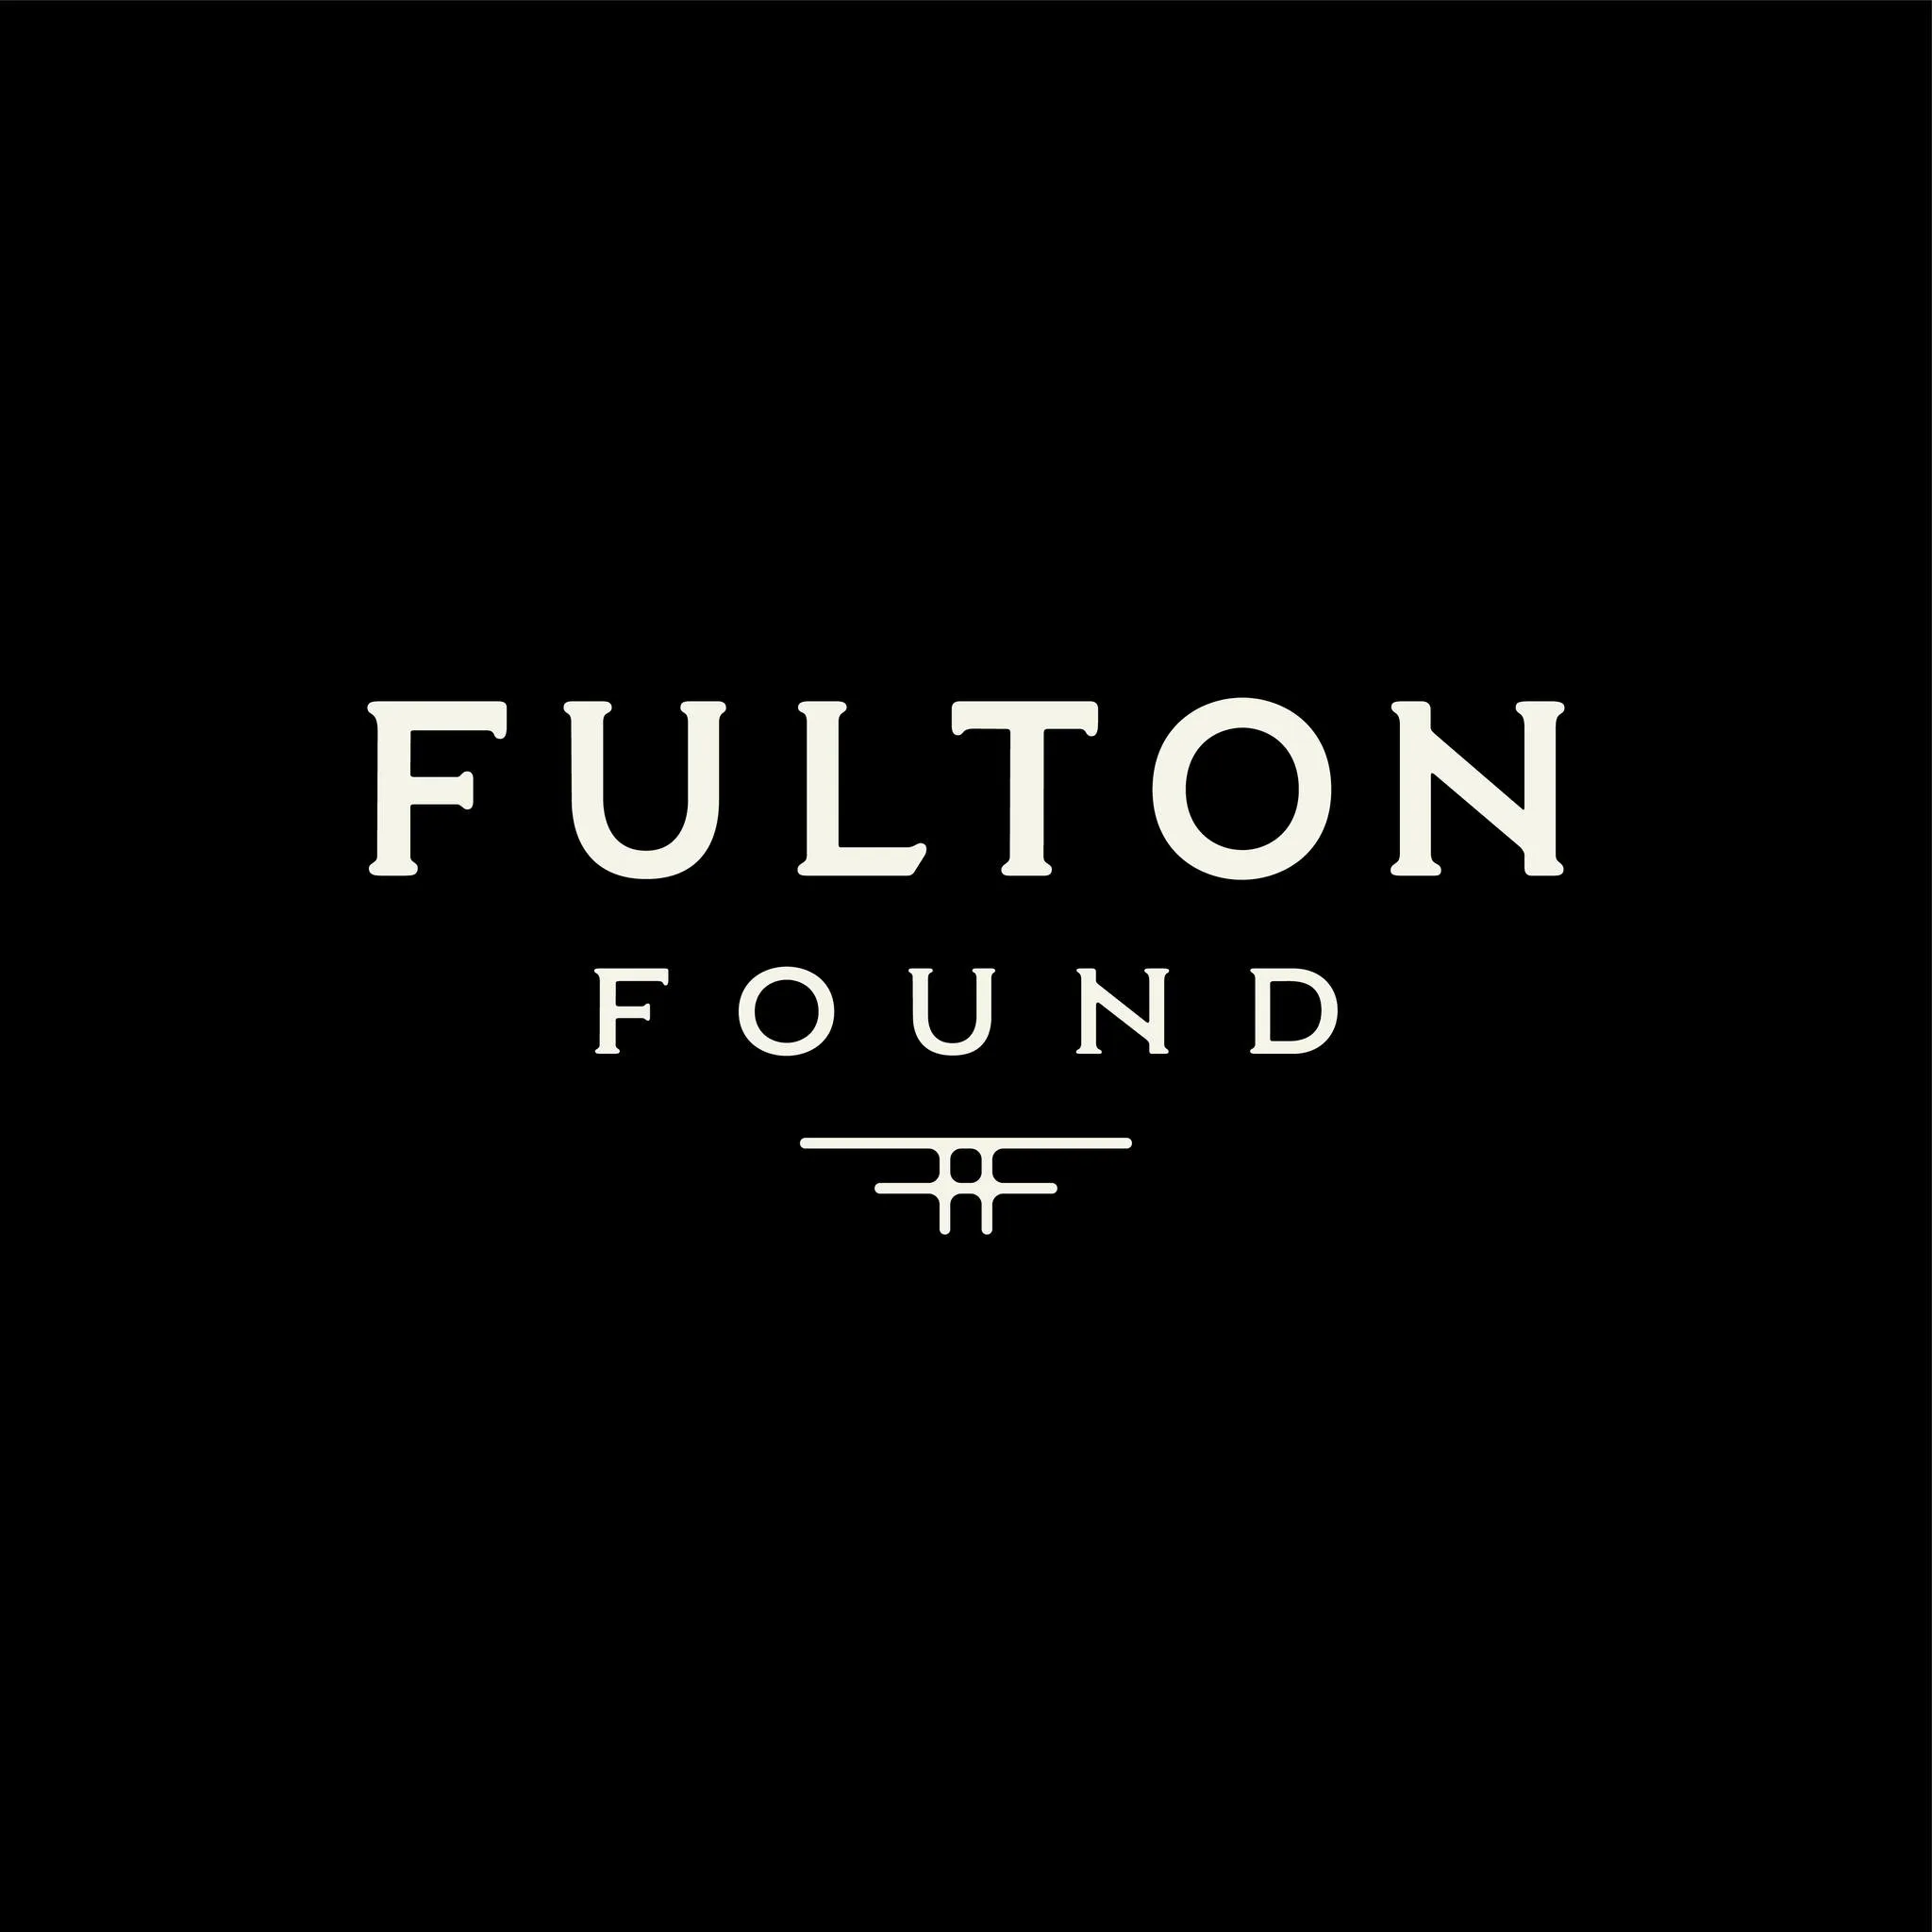 Fulton Found